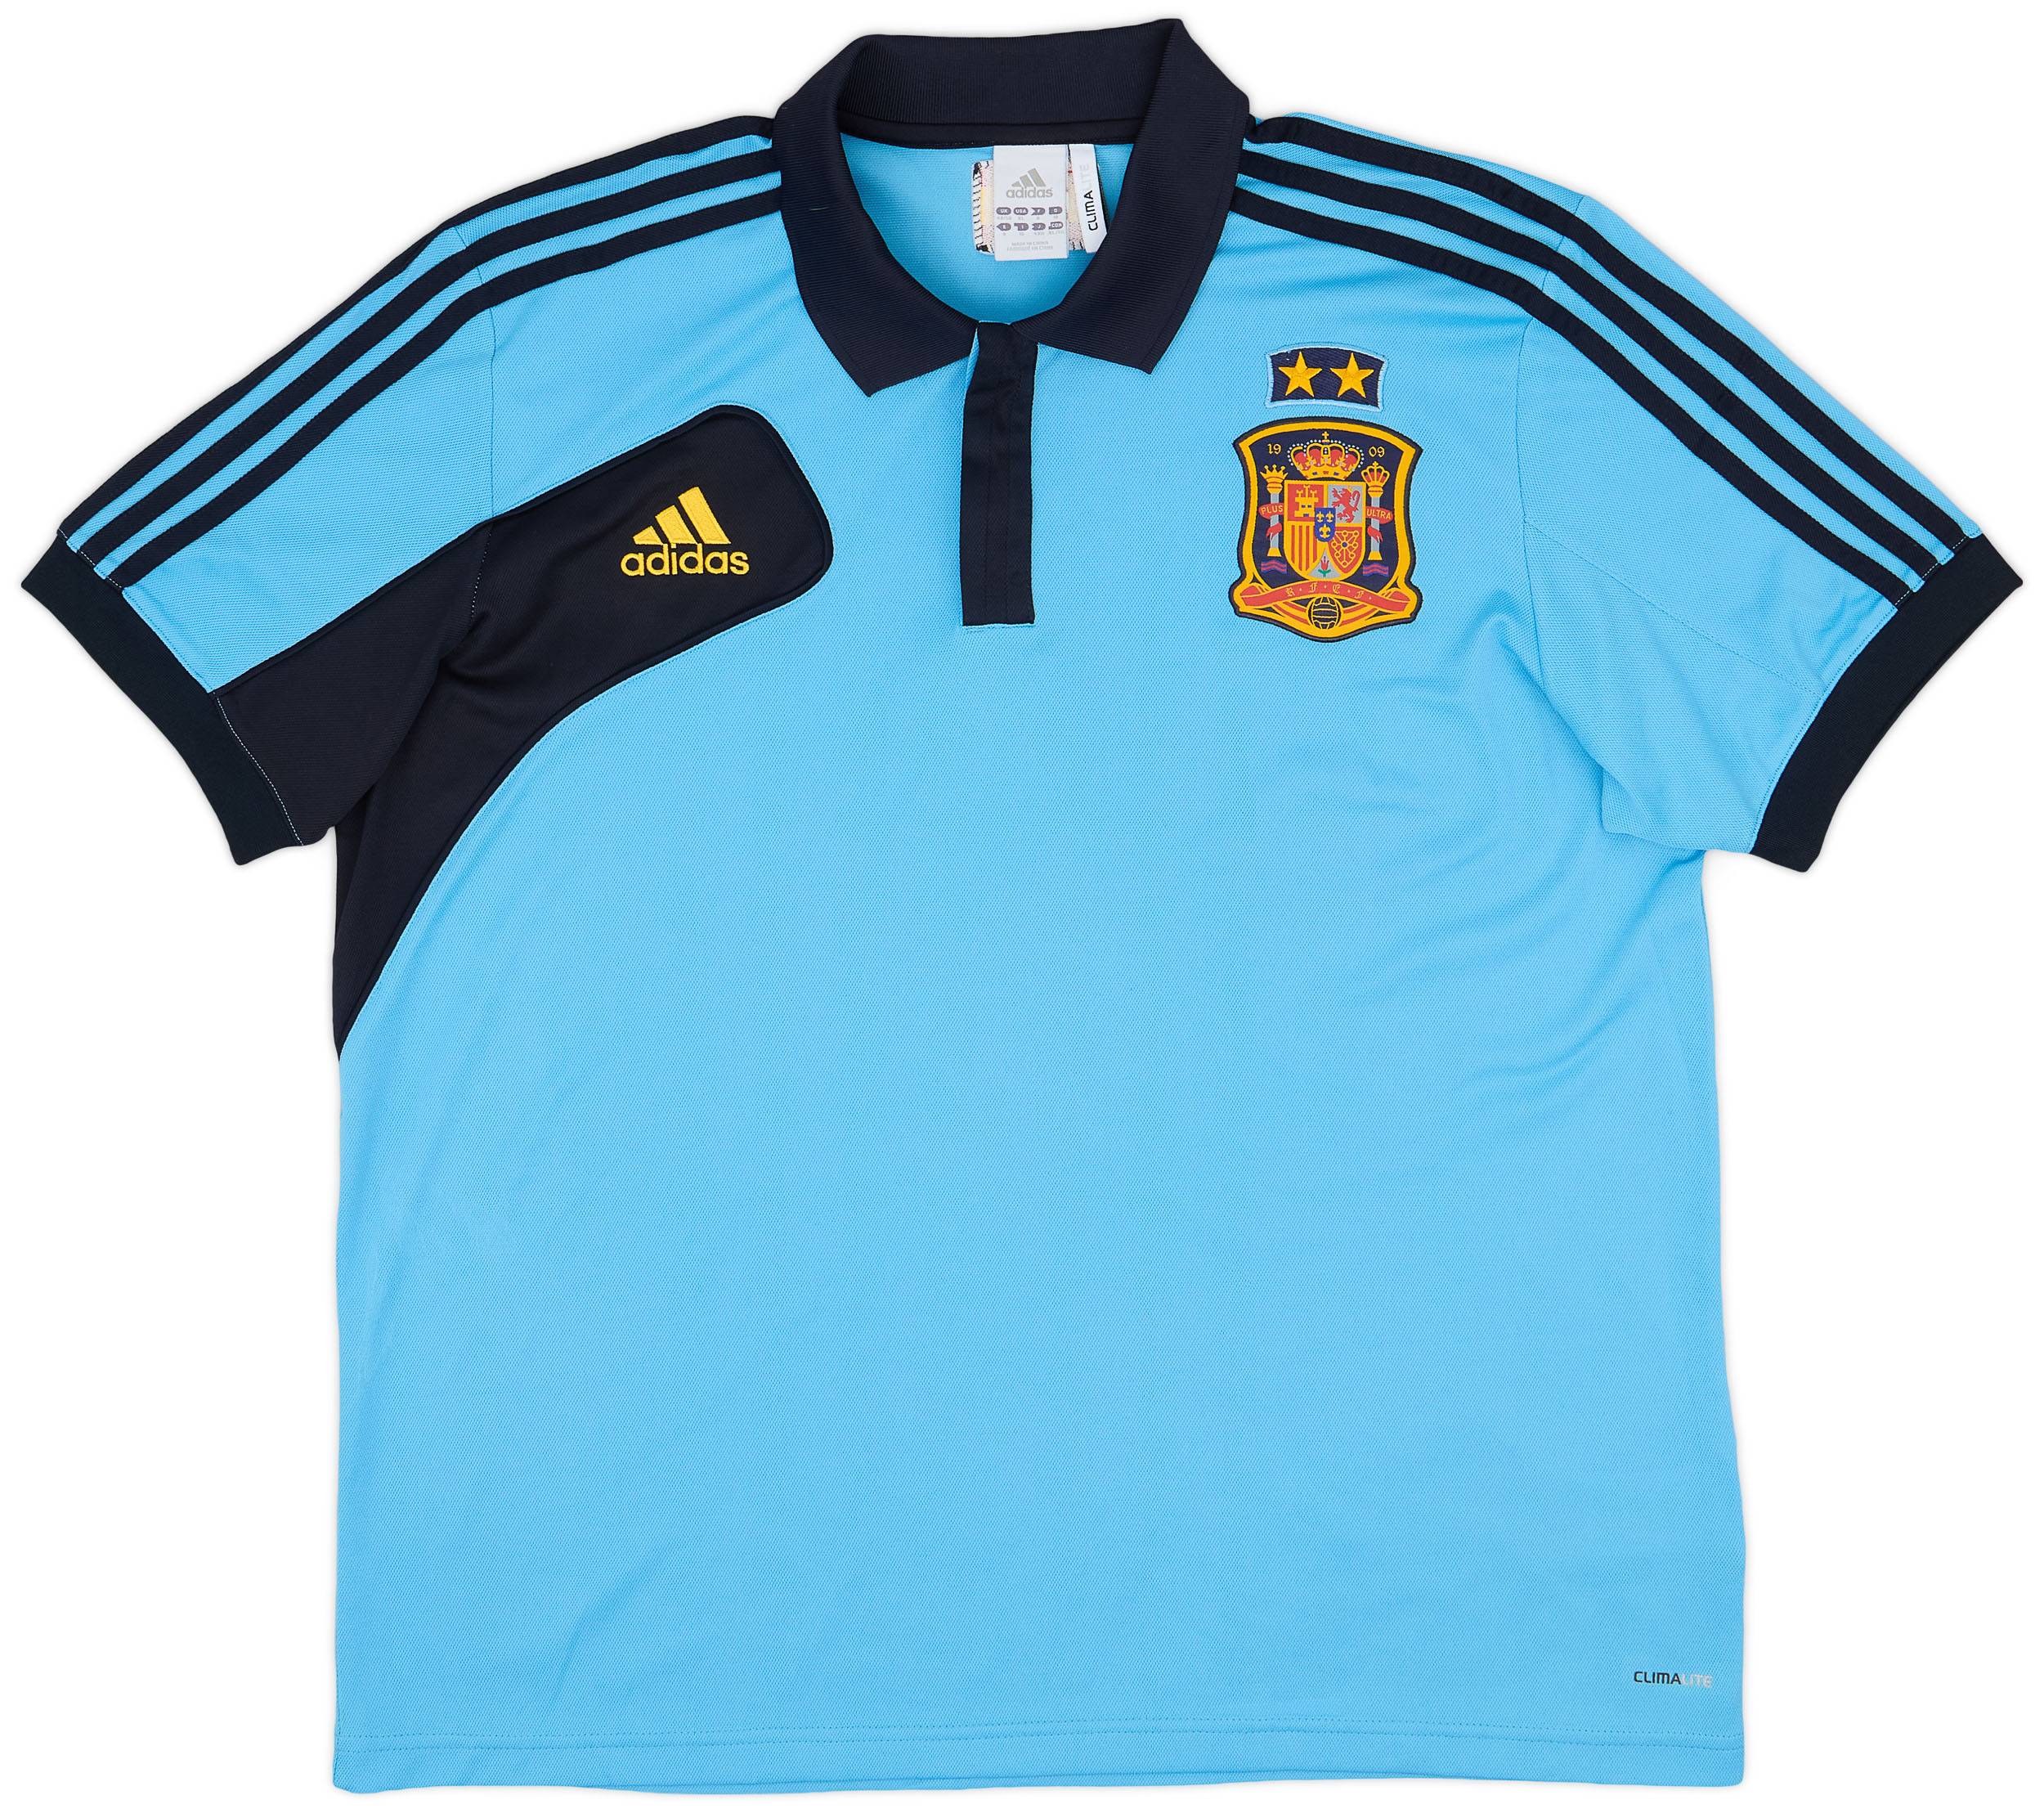 2011-12 Spain adidas Polo Shirt - 10/10 - (XXL)